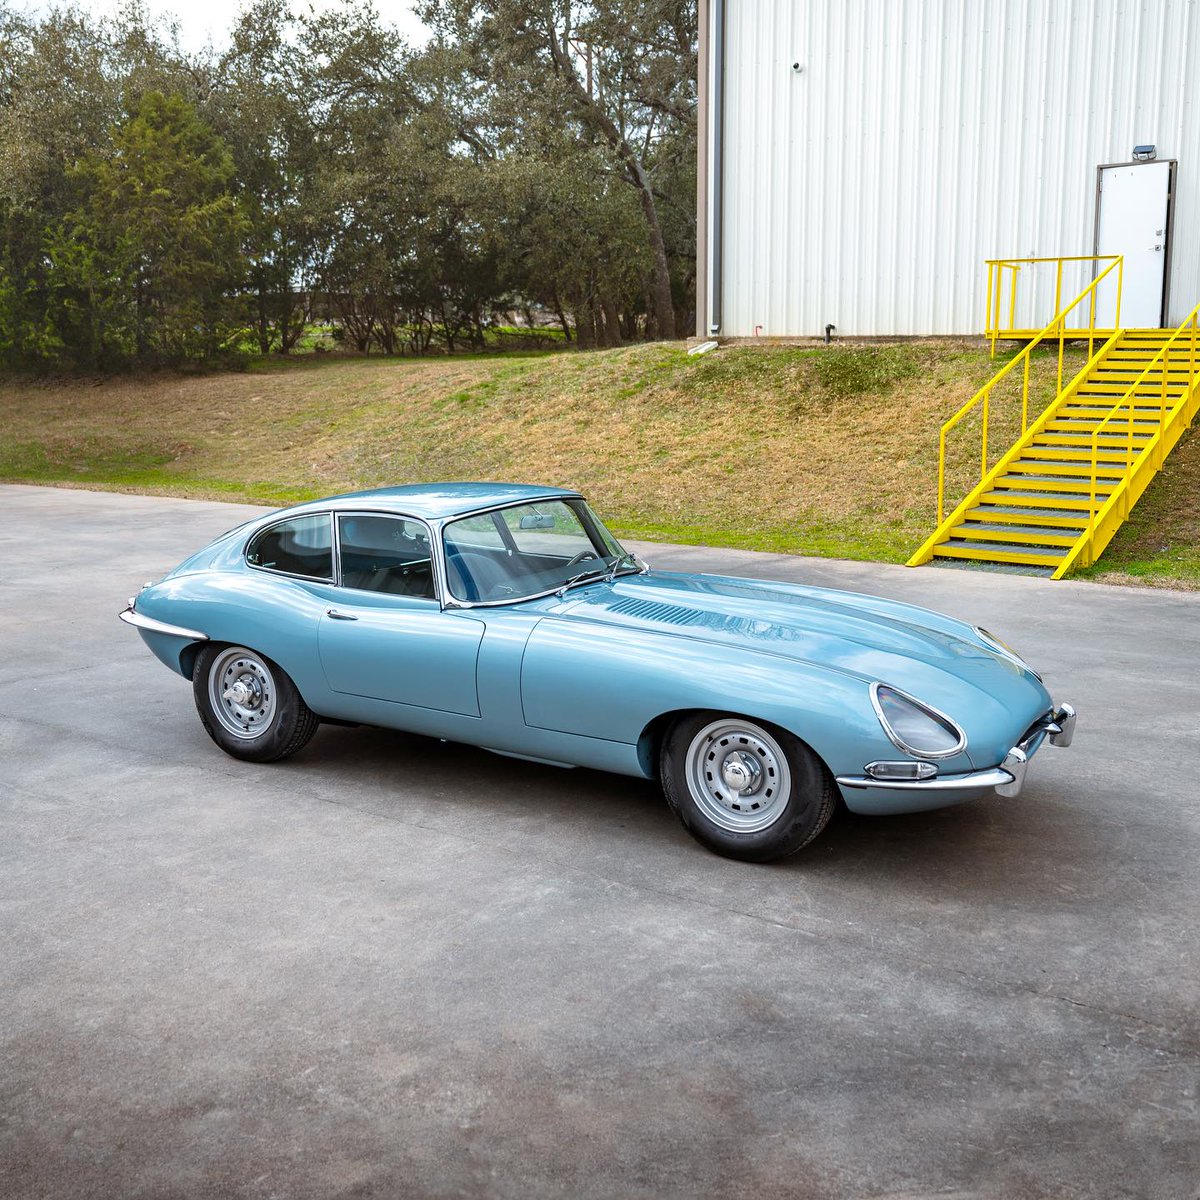 #swipeleft - 1964 Jaguar E Type finished in Opalescent Silver Blue in the @TeamCJWorks.
#JaguarEType #EType #XKE #BritishClassic#ClassicBritishCars #DriveVintage #ExoticCars #Supercars #InstaCar #CarPhotography #TeamCJ #Jaguar